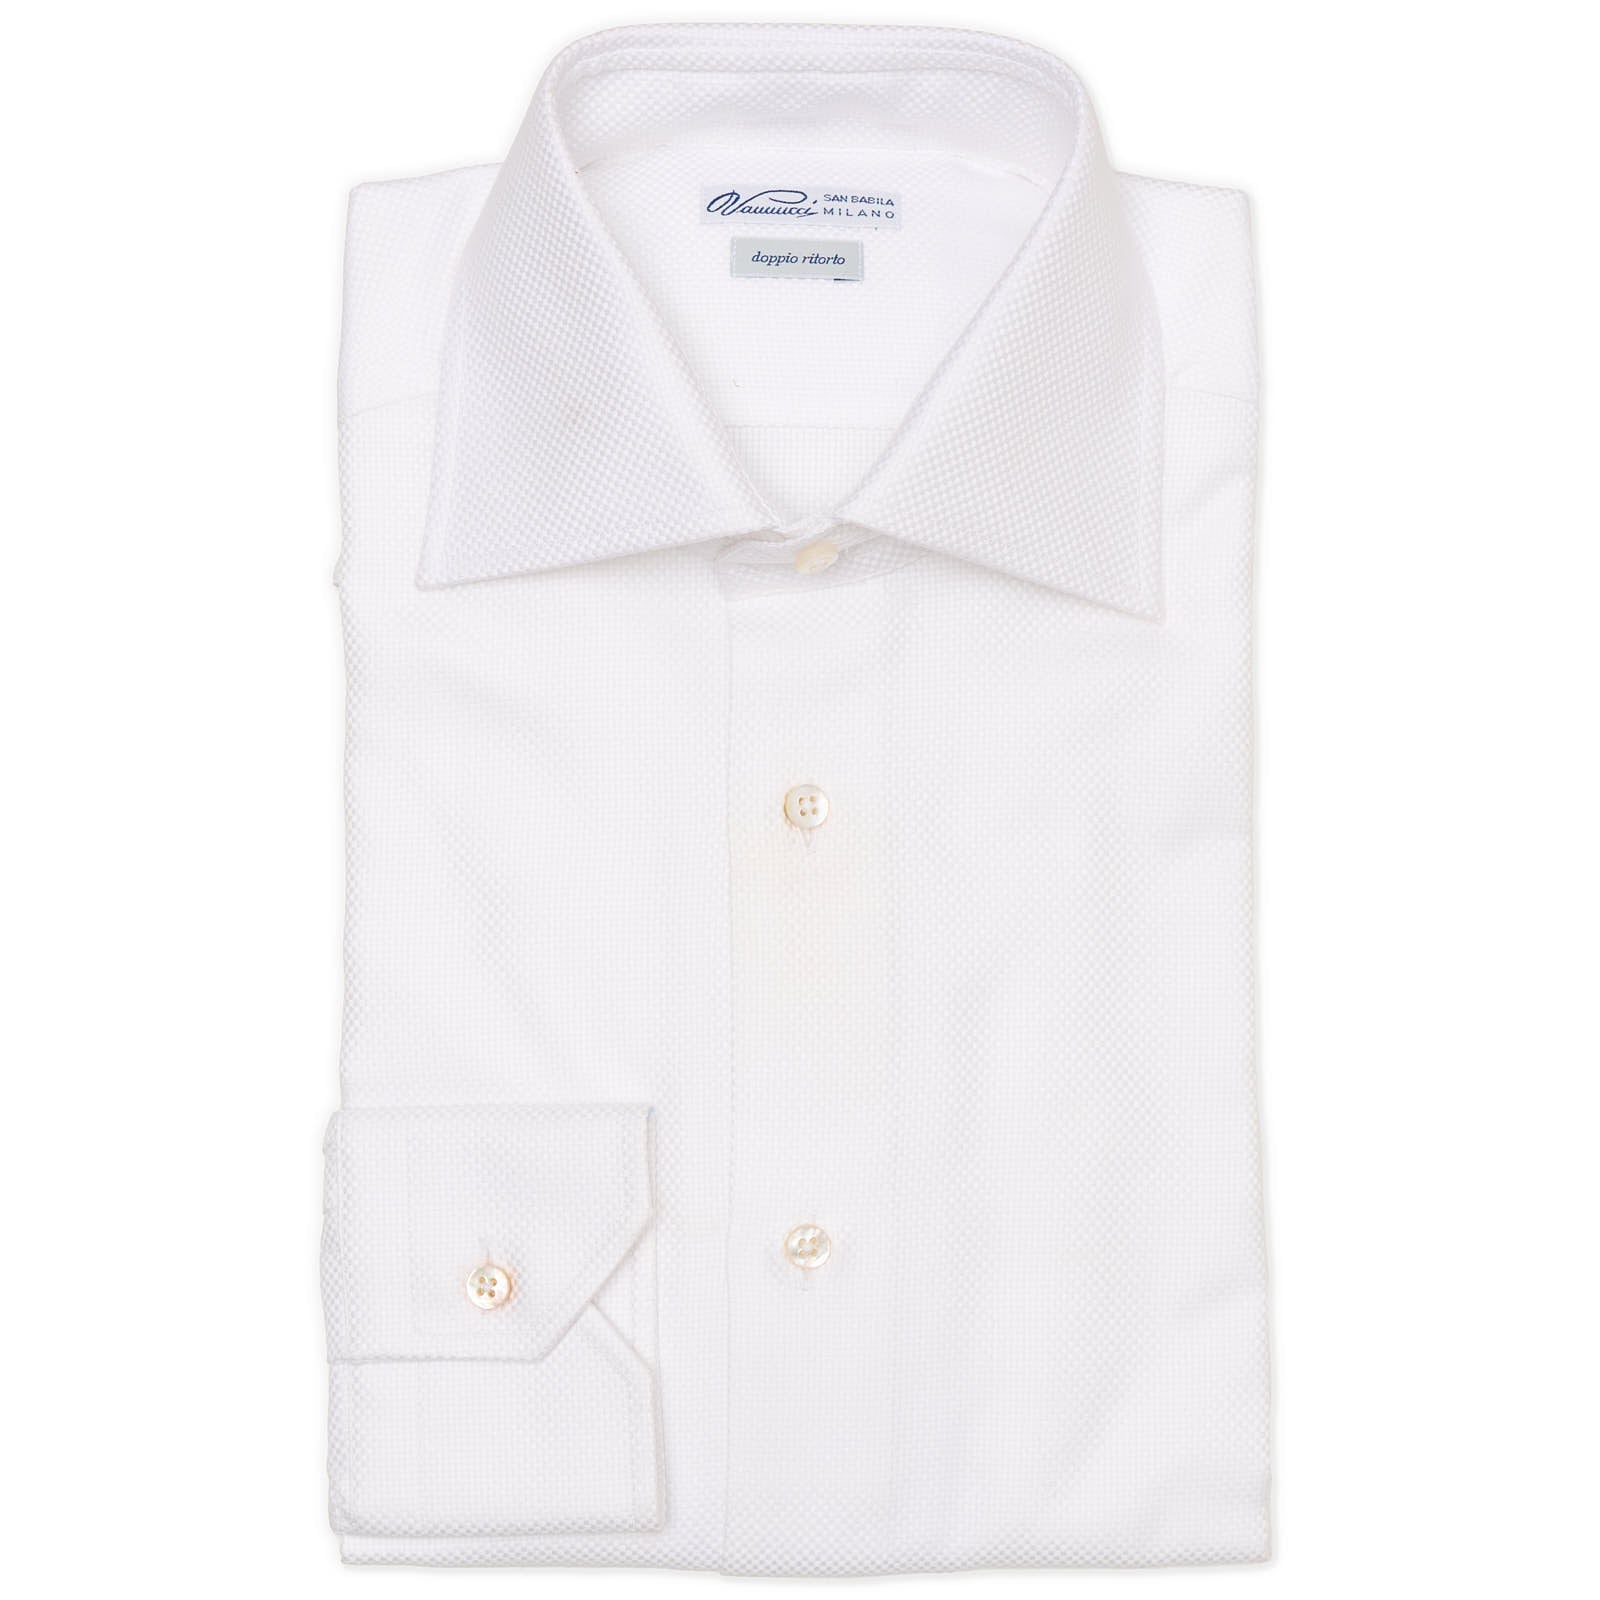 VANNUCCI Milano White Cotton Royal Oxford Dress Shirt EU 38 NEW US 15